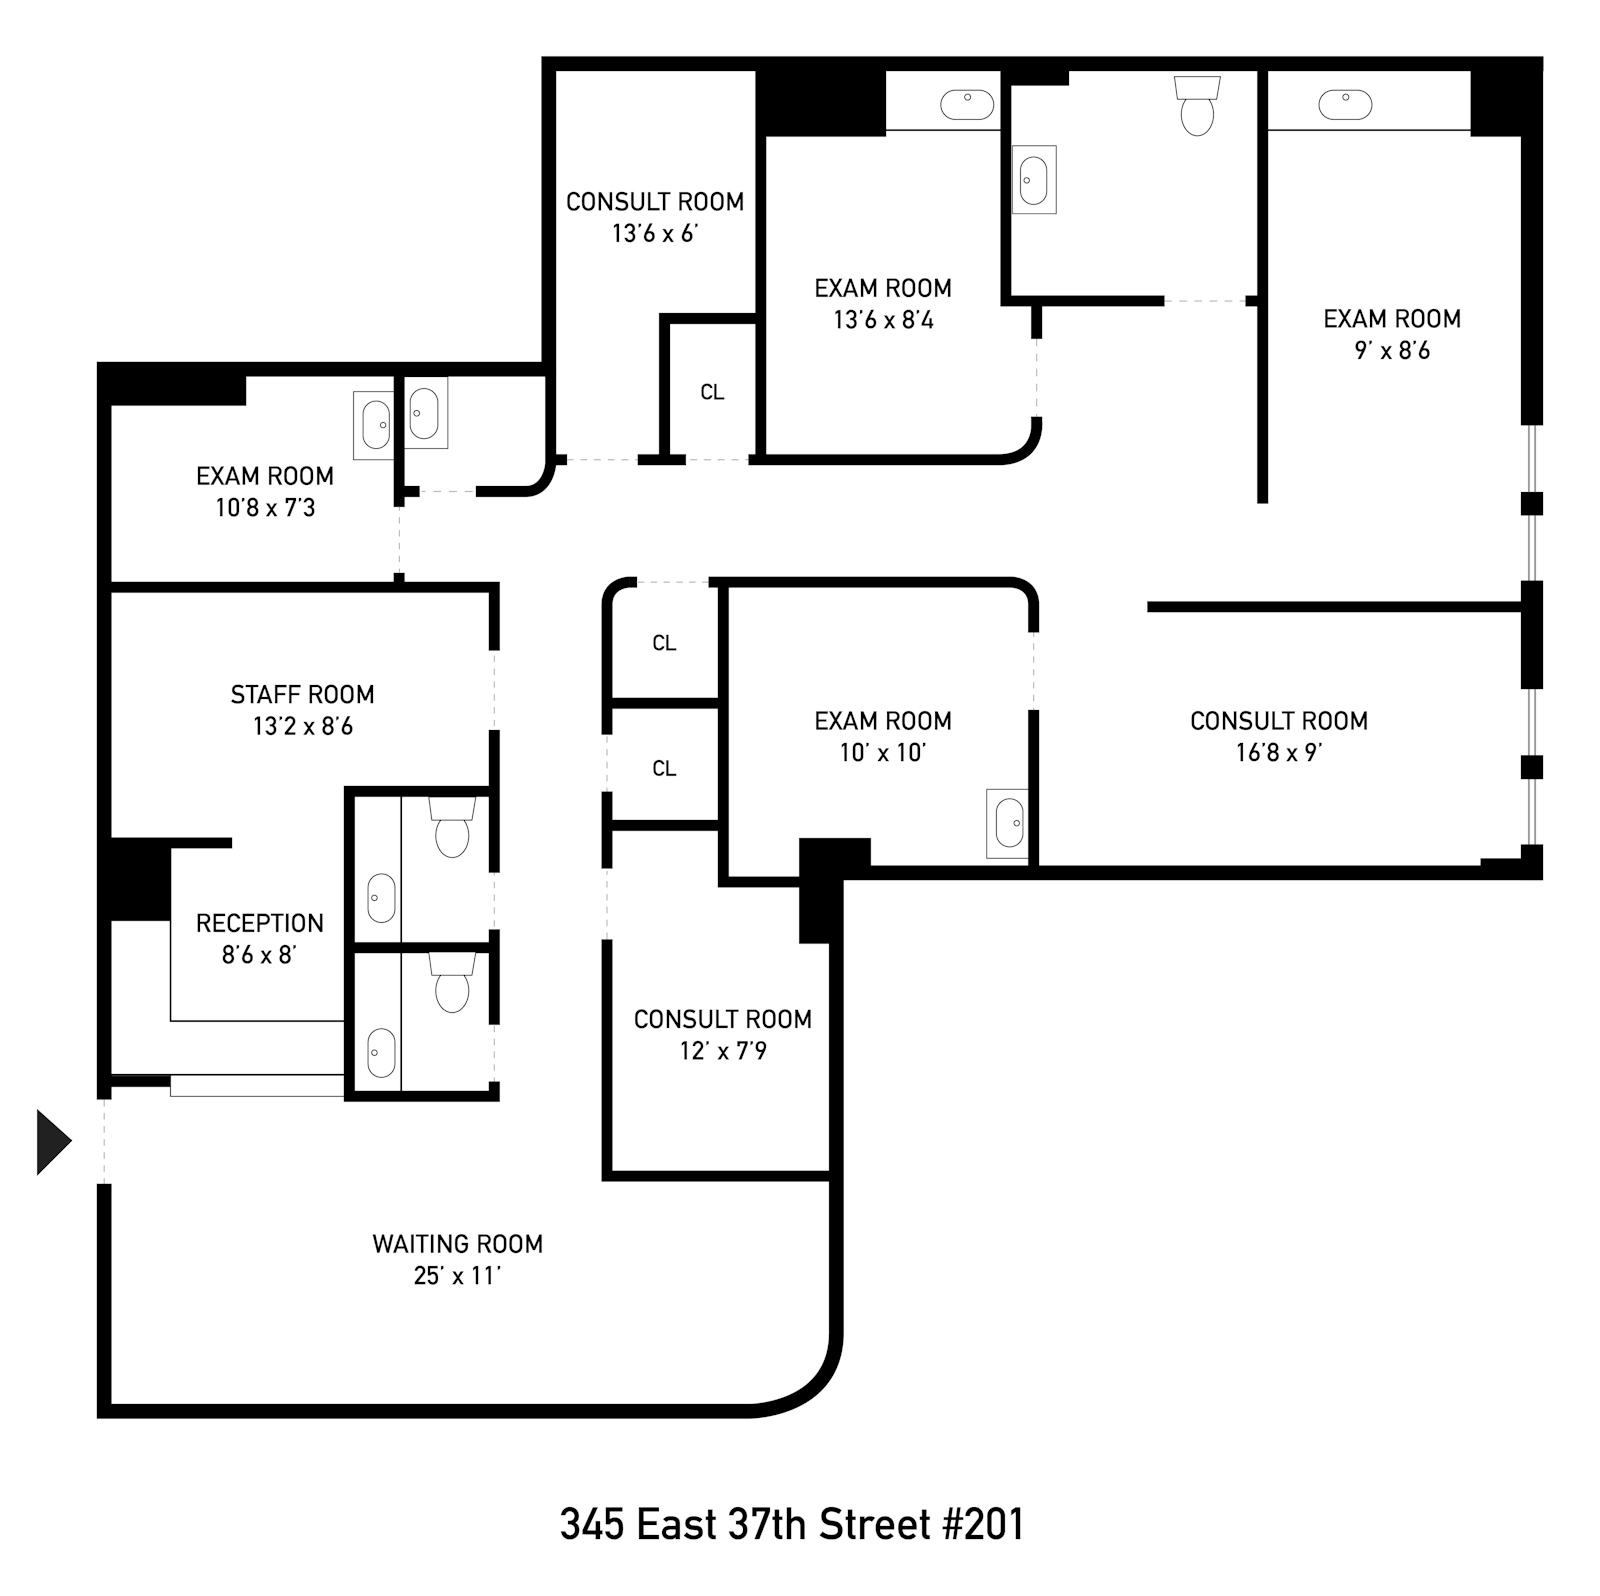 Floorplan for 345 East 37th Street, 201